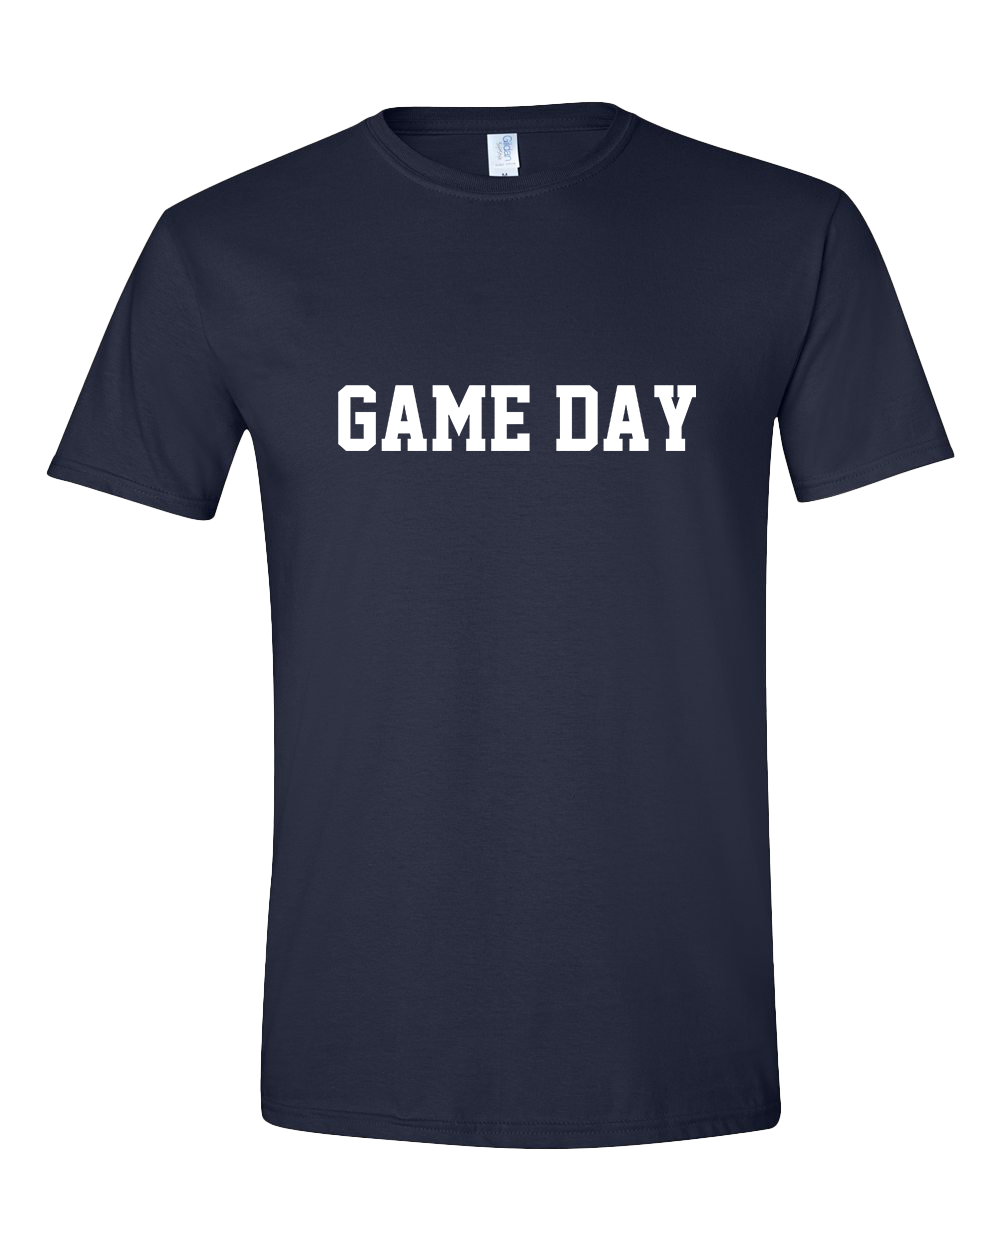 Game Day tshirt - Navy